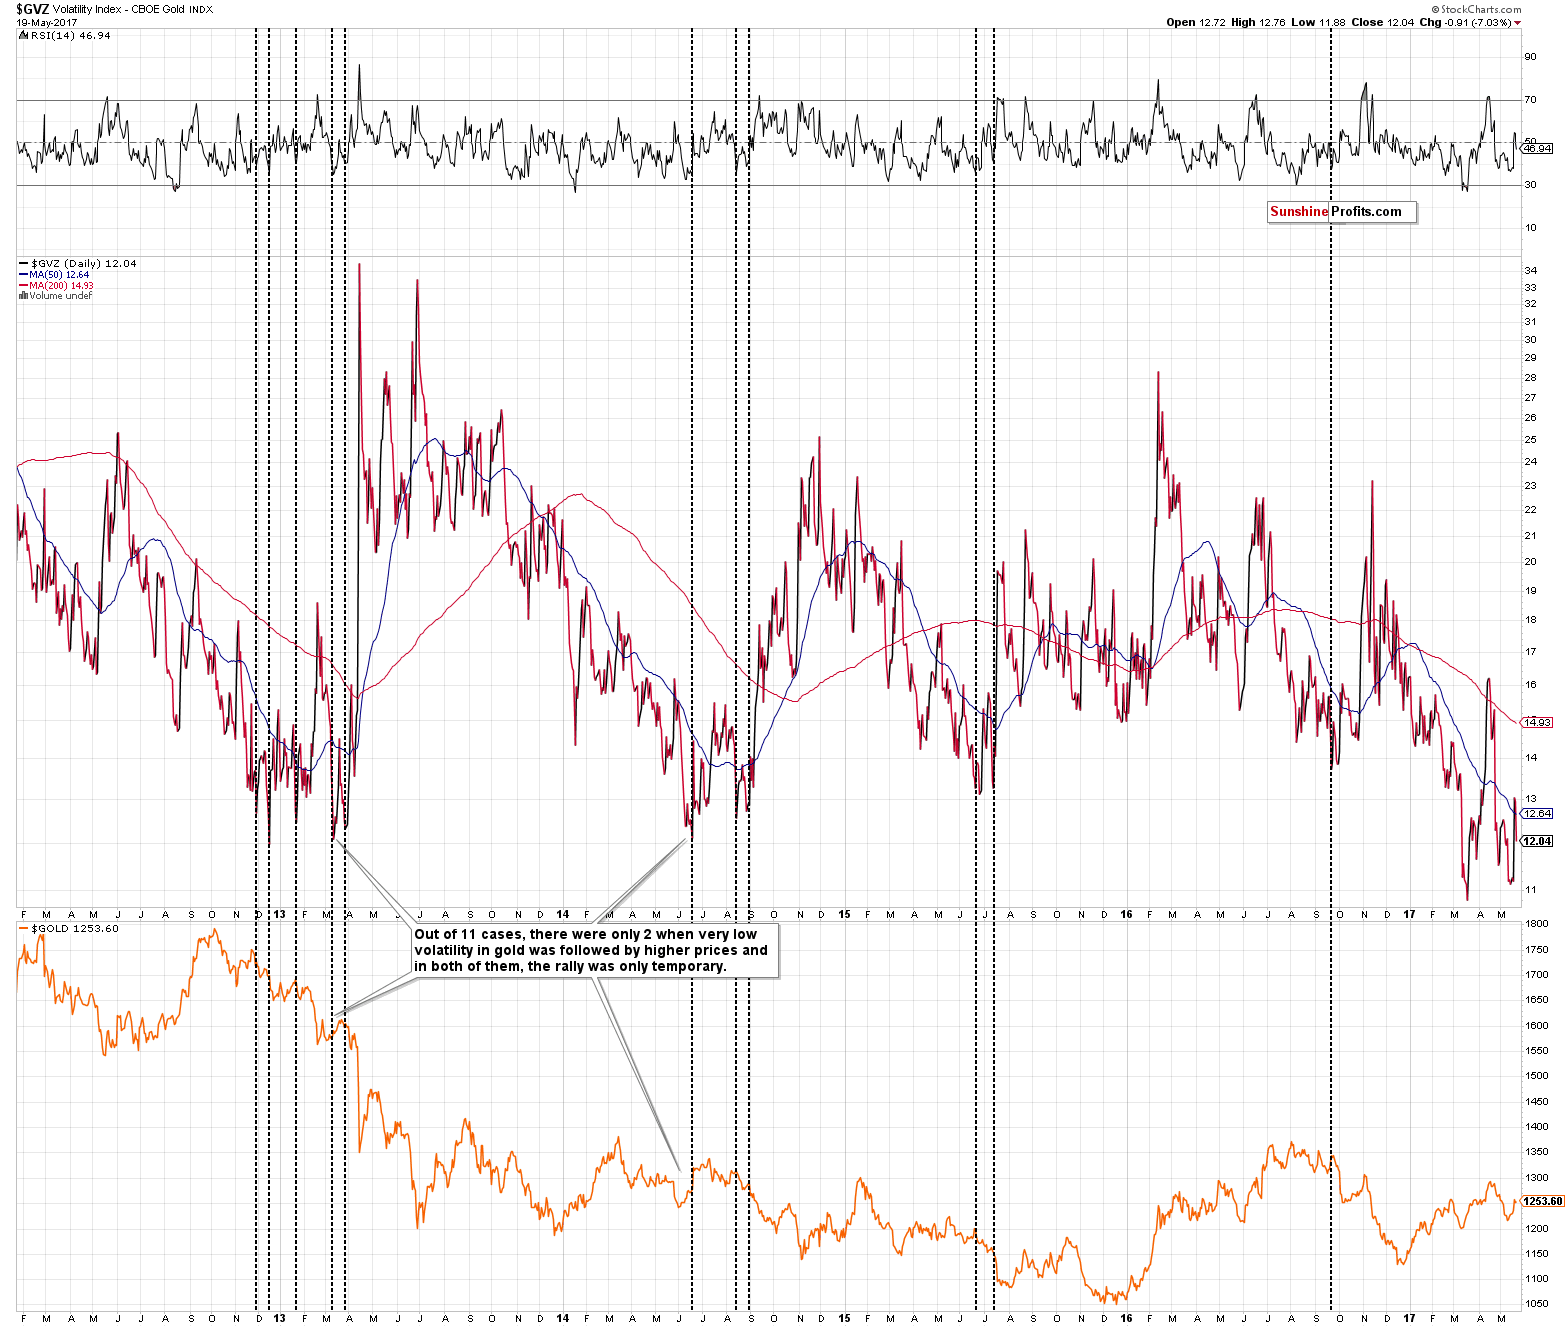 Gold’s Declining Volatility